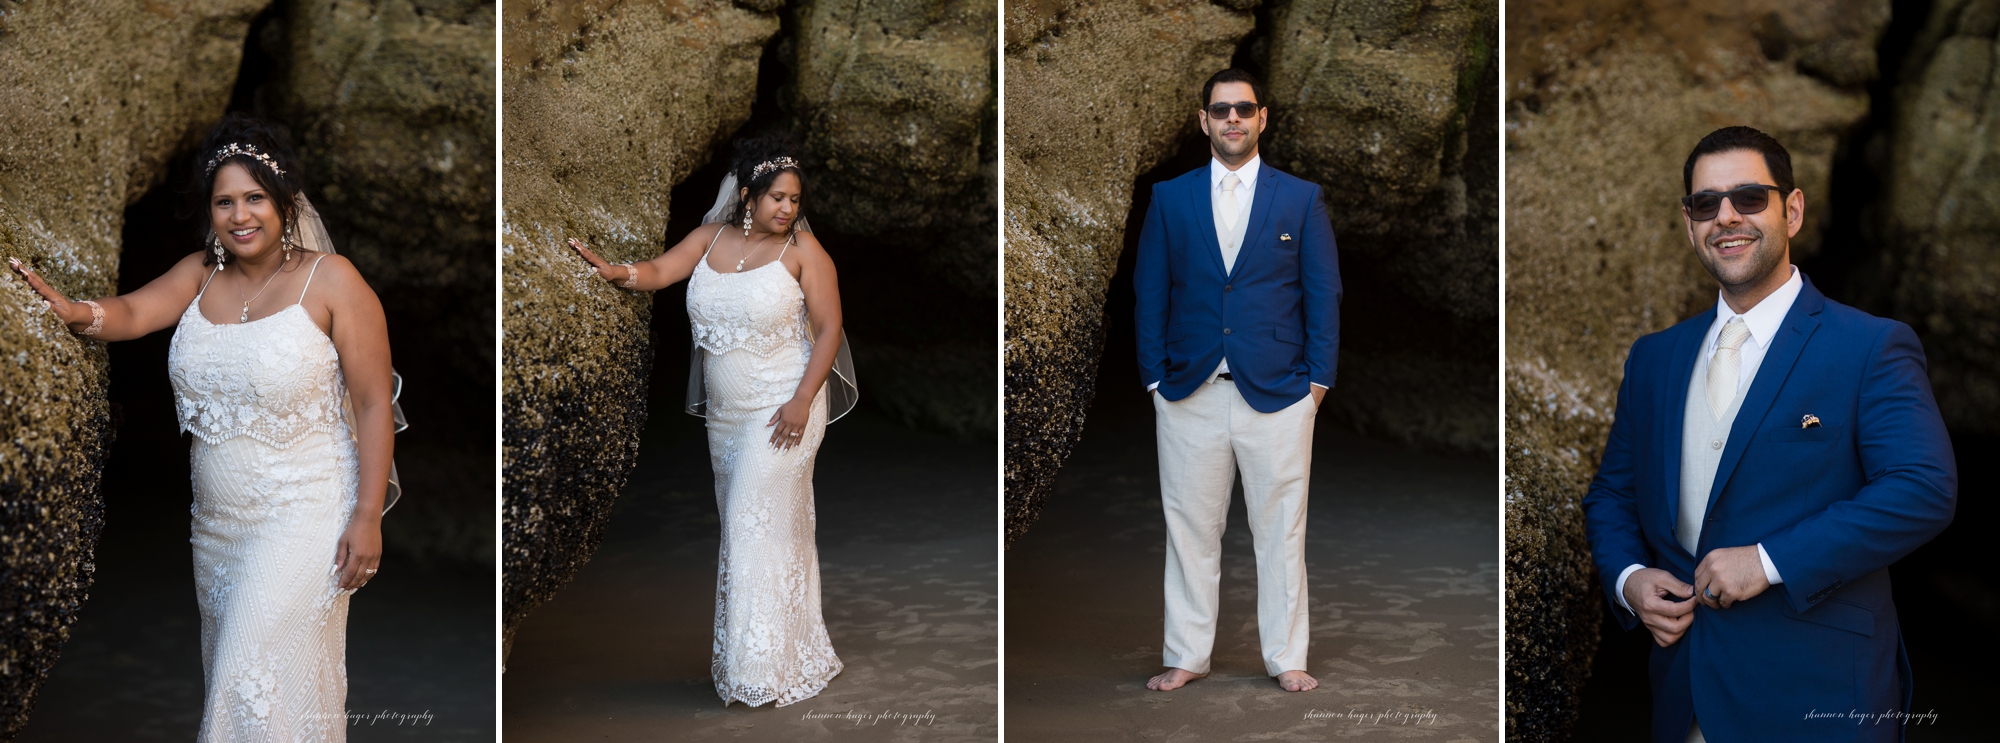 cannon beach wedding photographer, oregon coast wedding photographer, oregon elopement photography, shannon hager photography